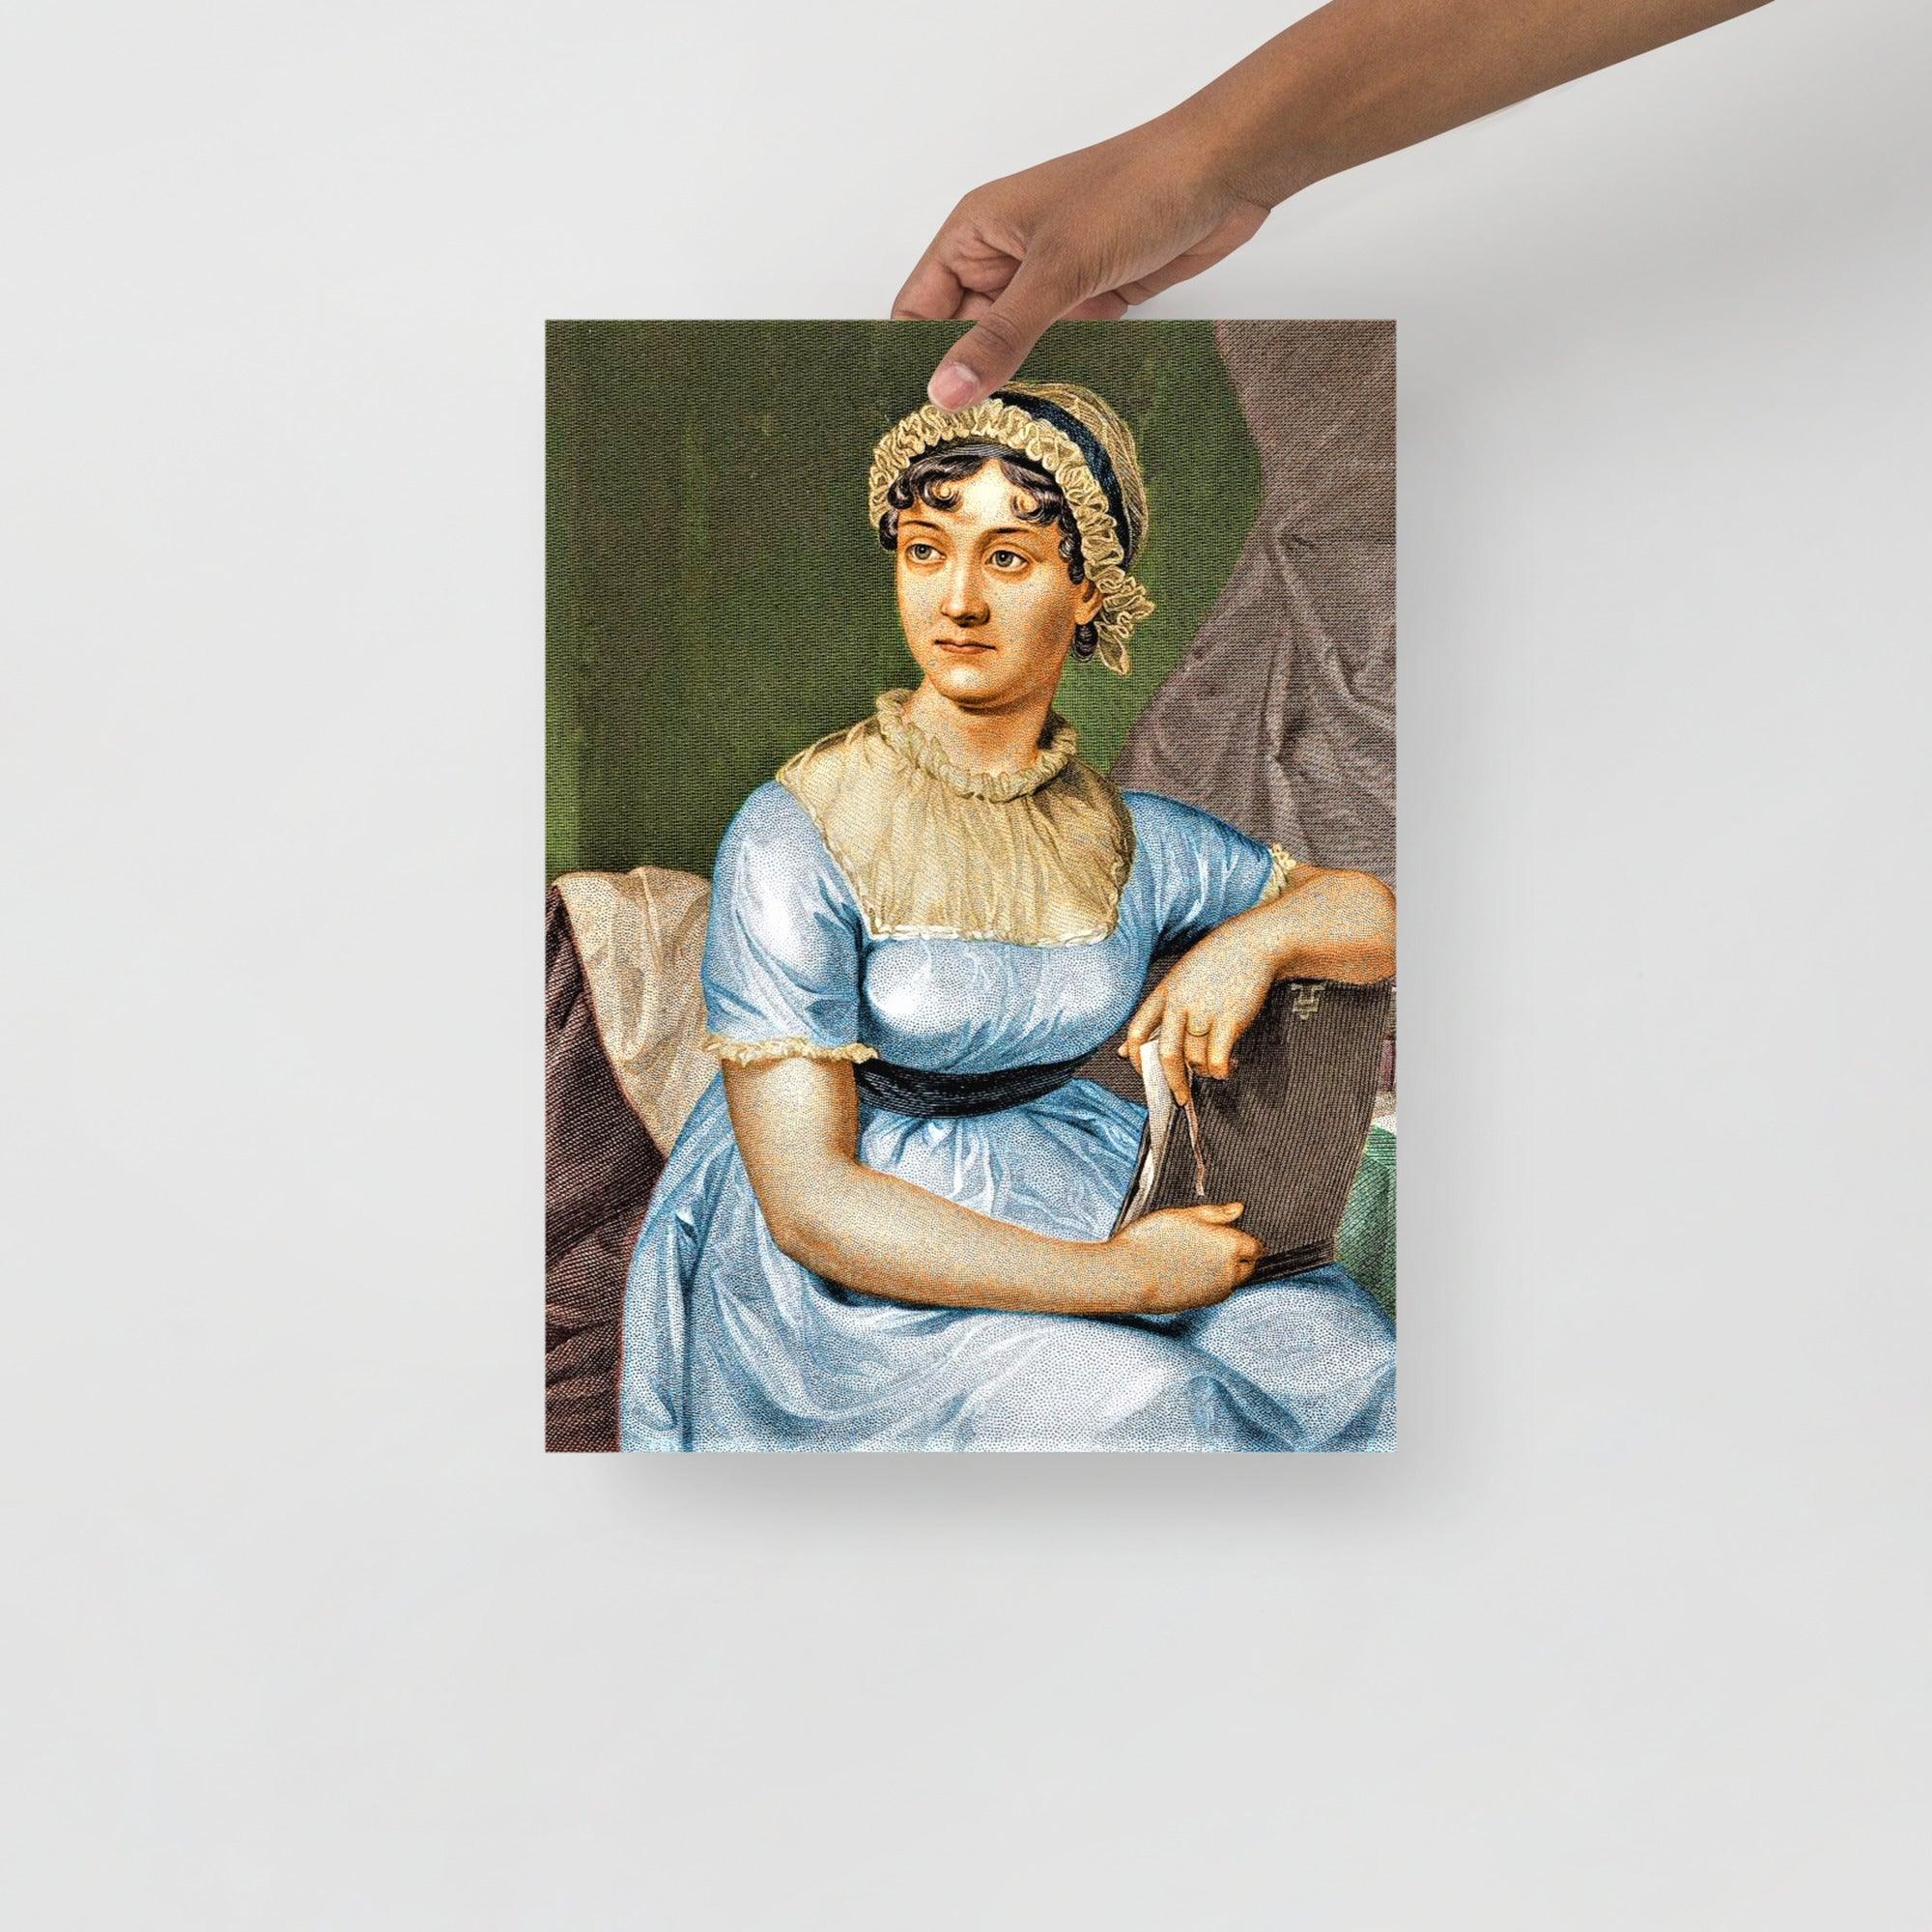 A Jane Austen poster on a plain backdrop in size 12x16”.